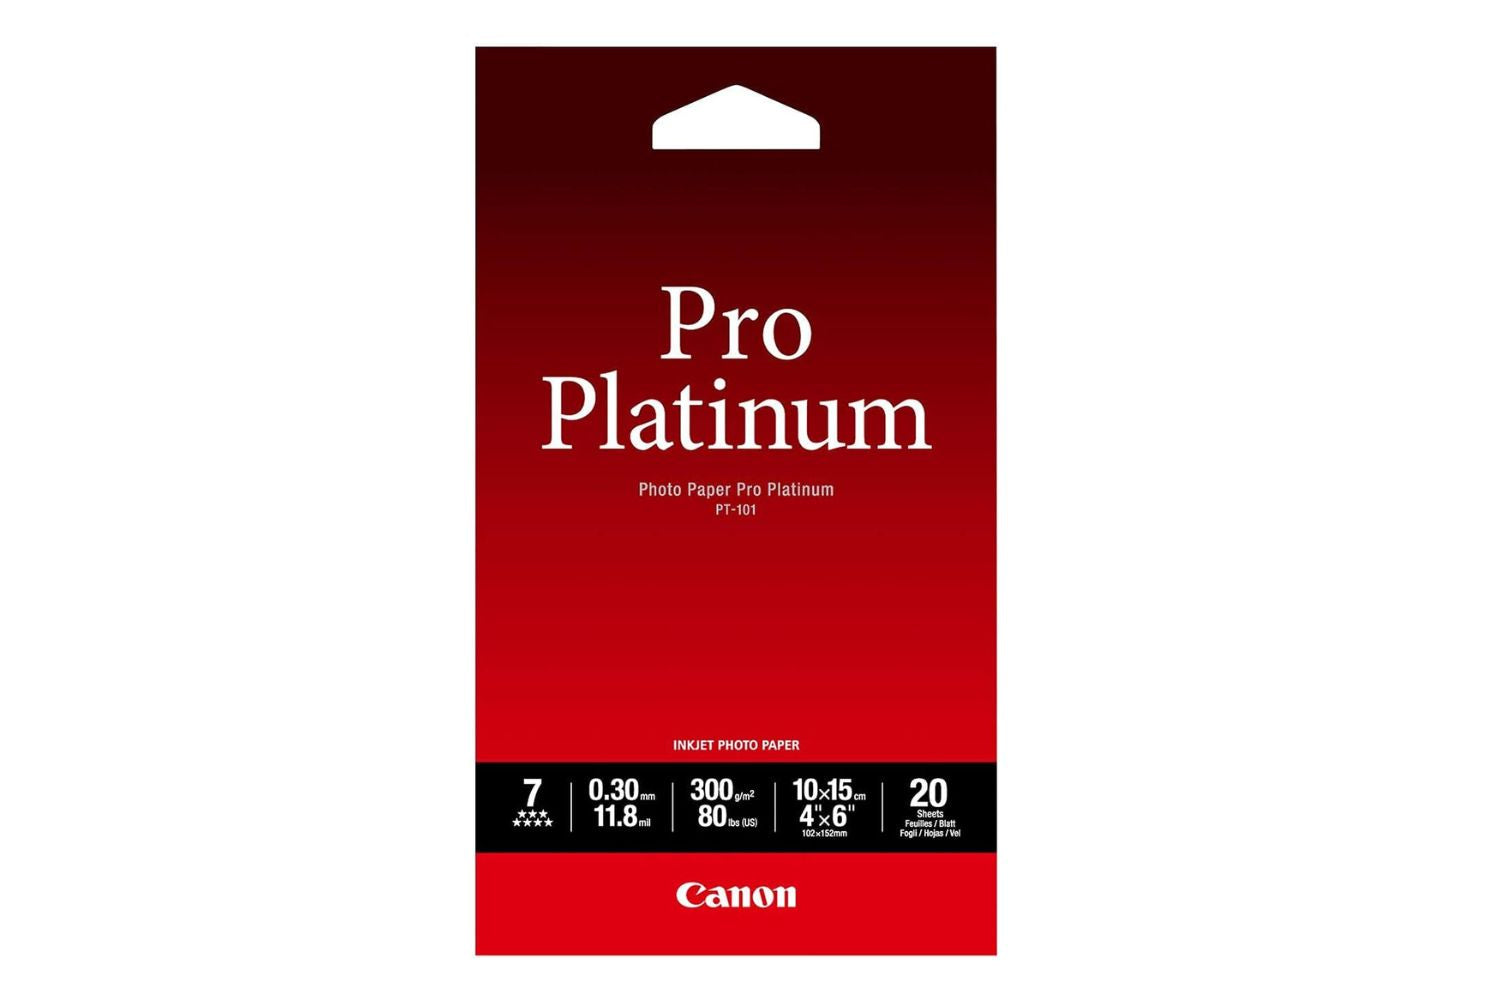  Canon Photo Paper Pro Platinum PT-101